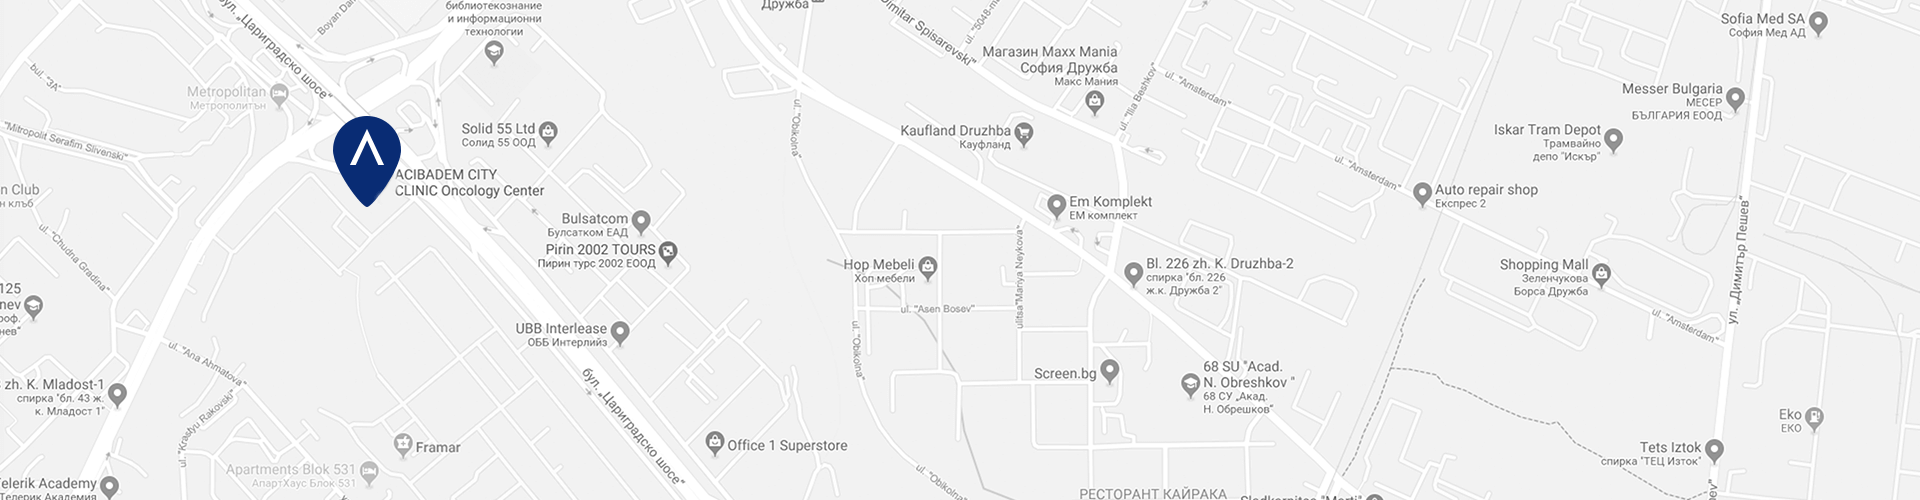 acibadem-city-clinic-cancer-center-google-maps-image.png